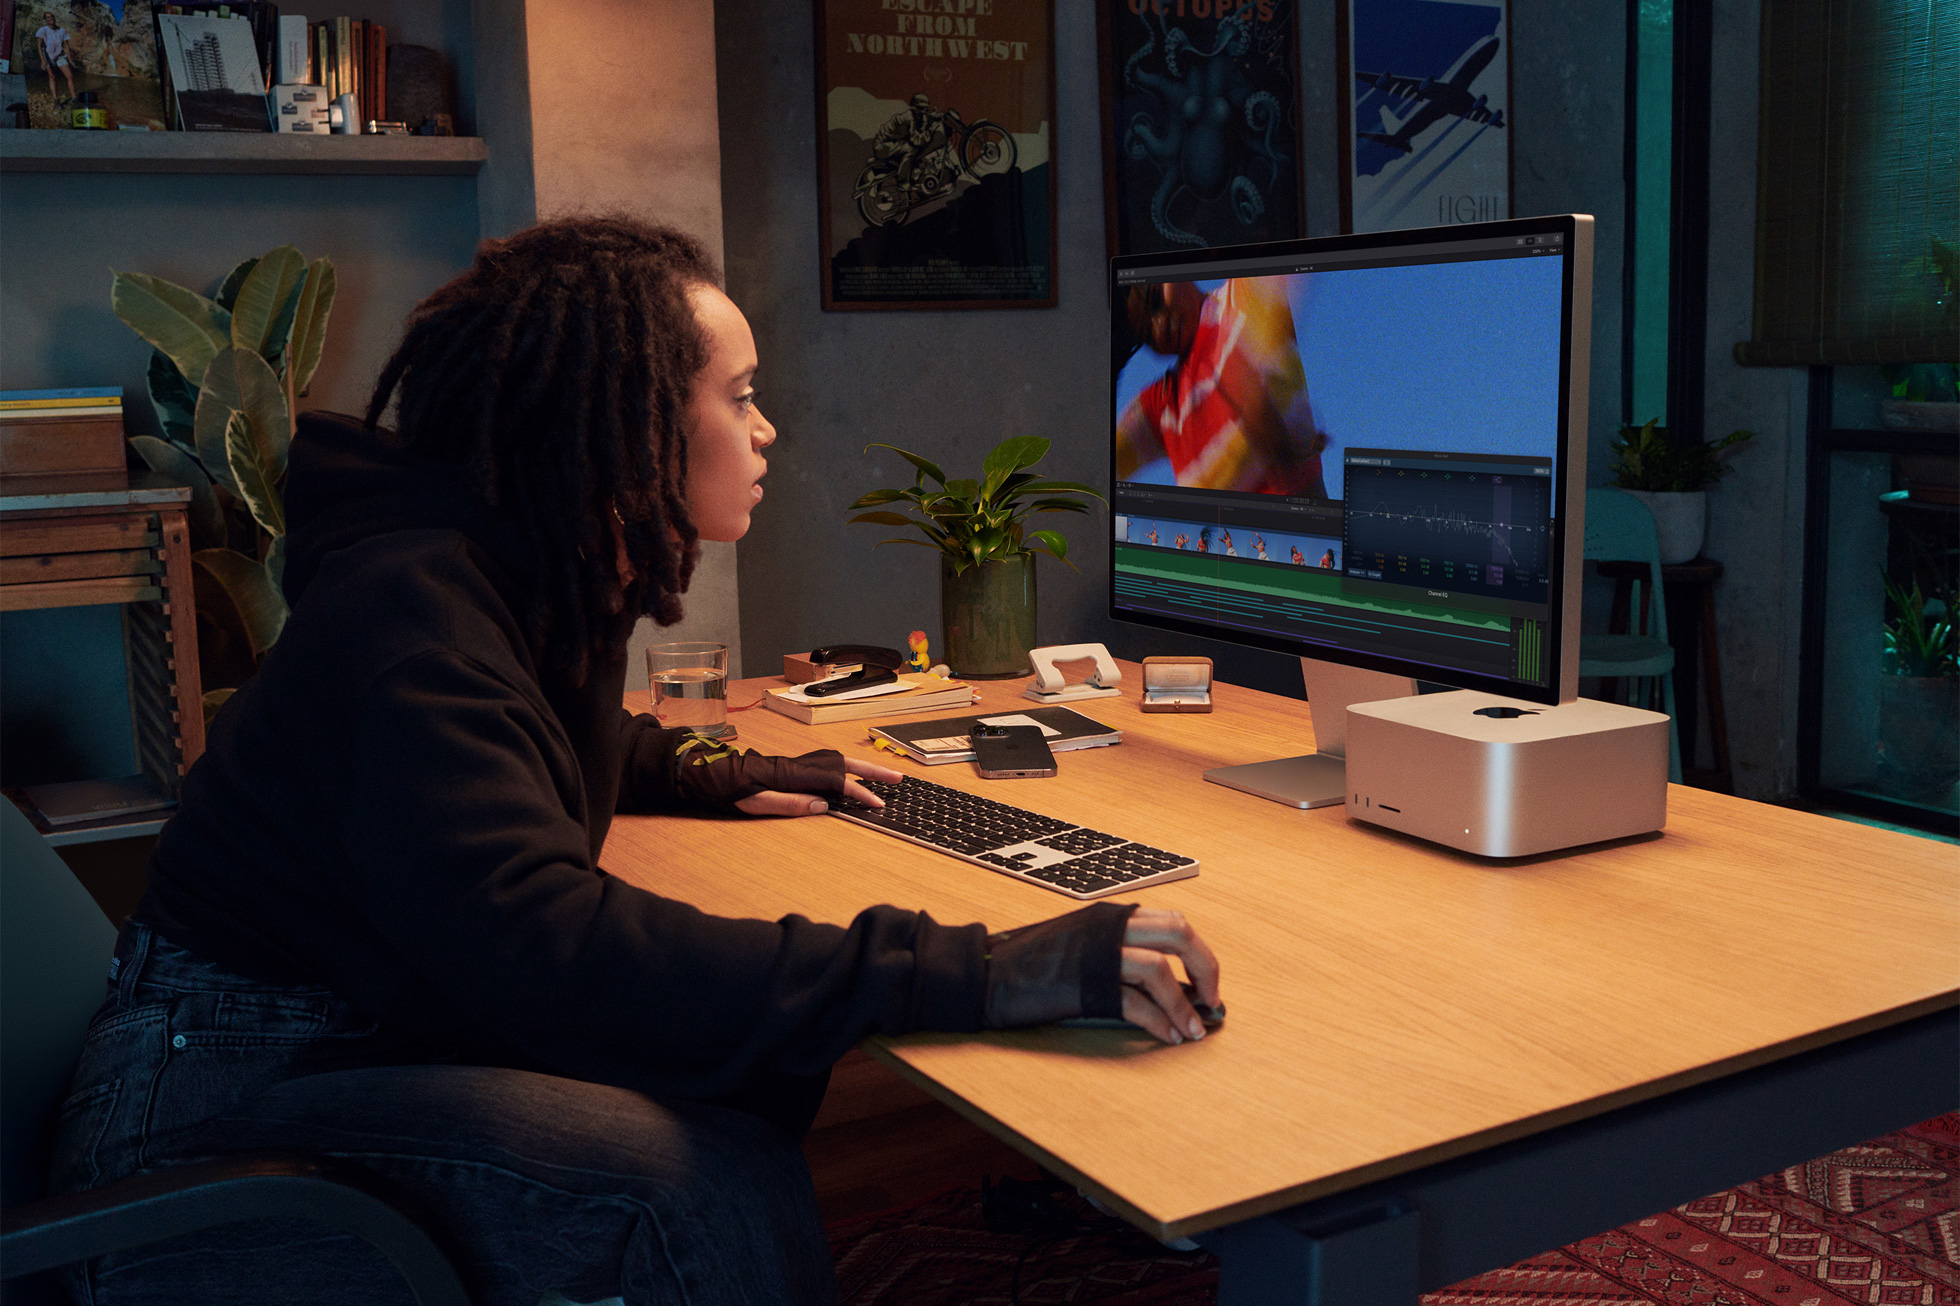 Apple Studio Display with Mac Studio